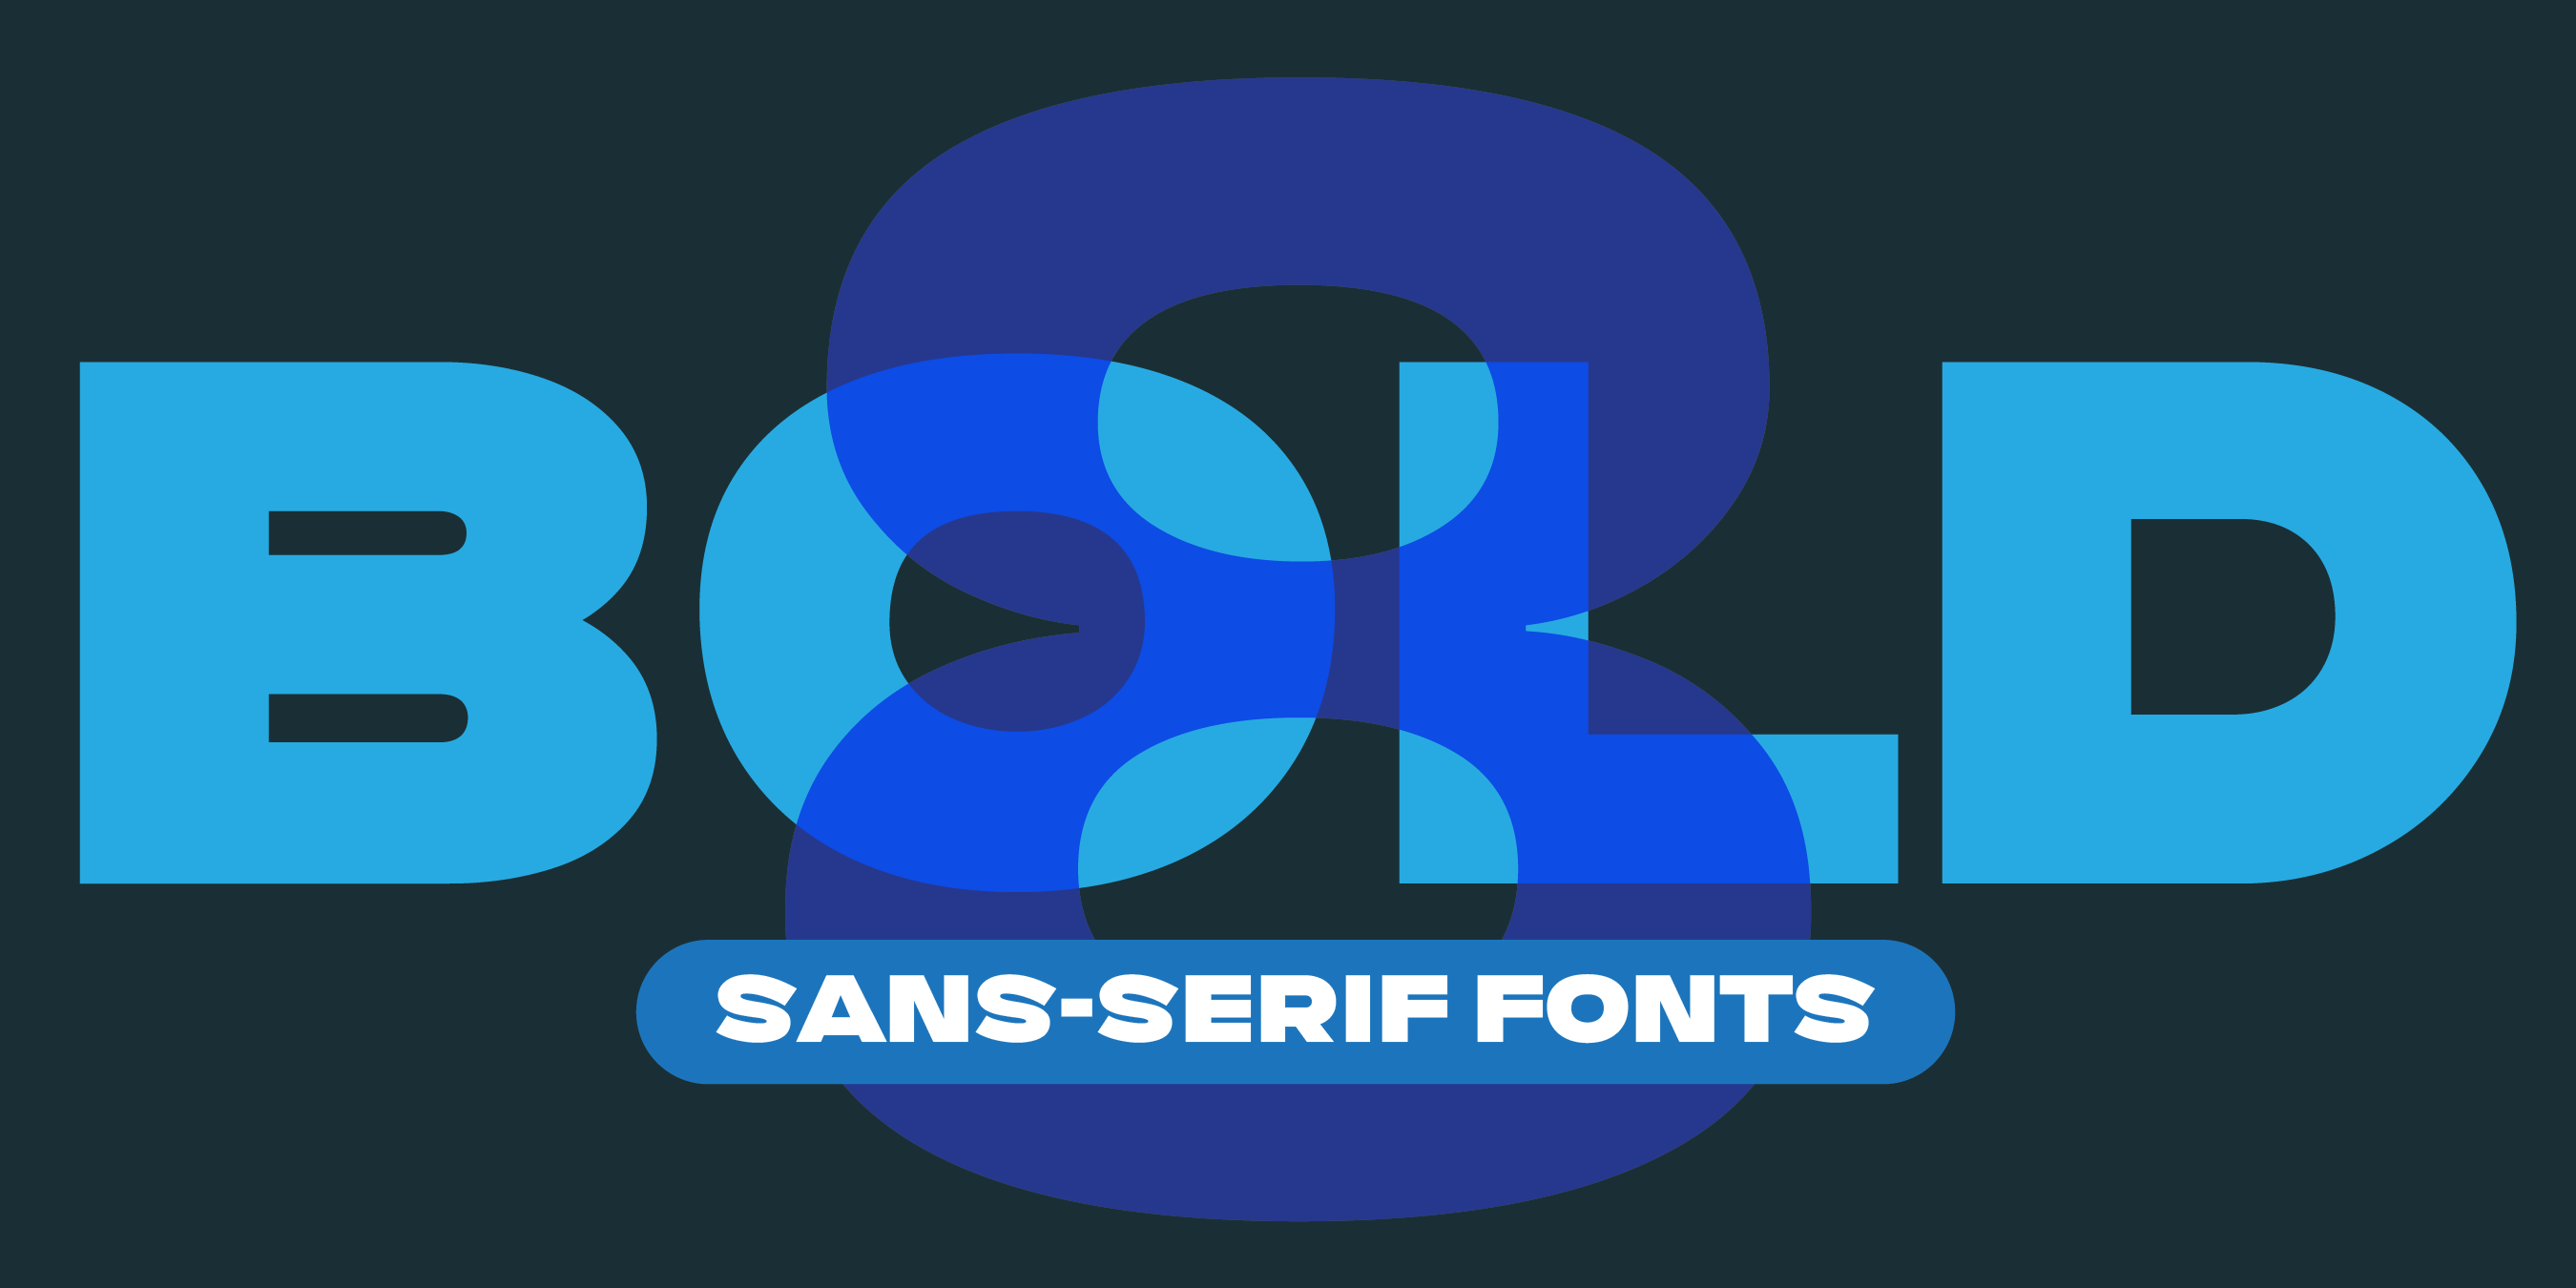 Bold sans-serifs: Not just loud, but profoundly expressive